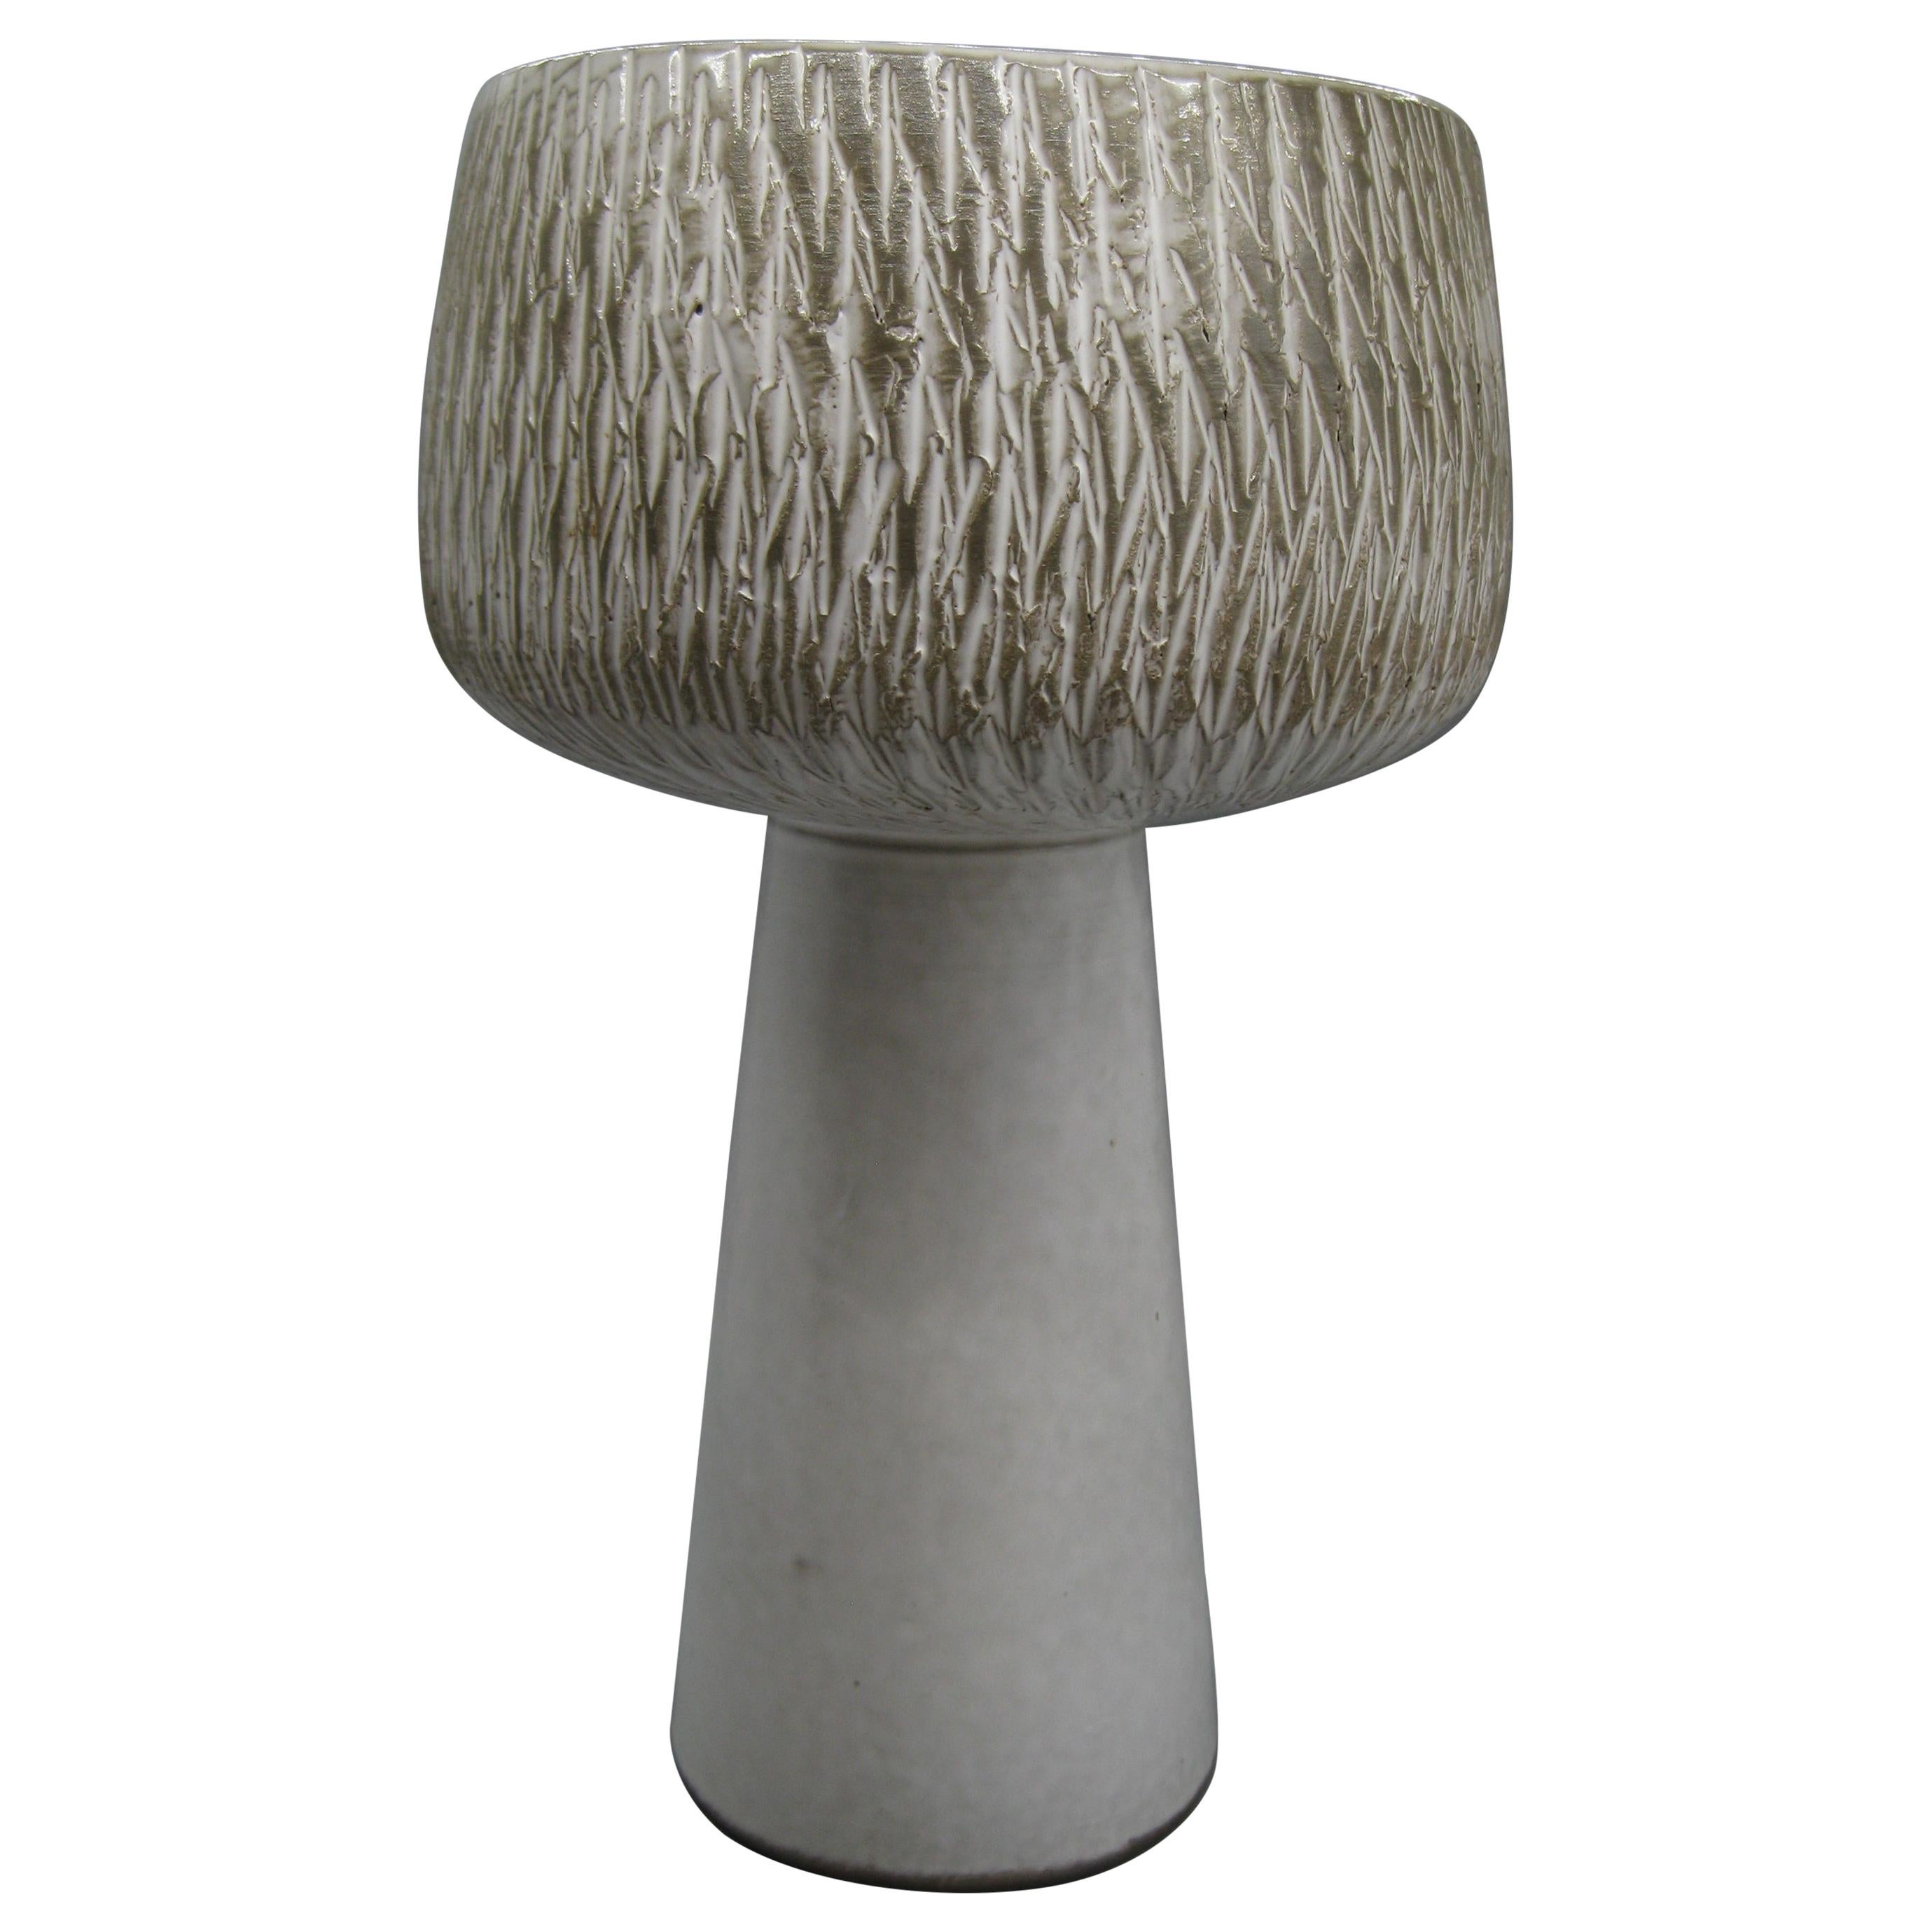 1960s Japanese Modernist Ikebana Ceramic Pottery Sgraffito Pedestal Vase Vessel For Sale